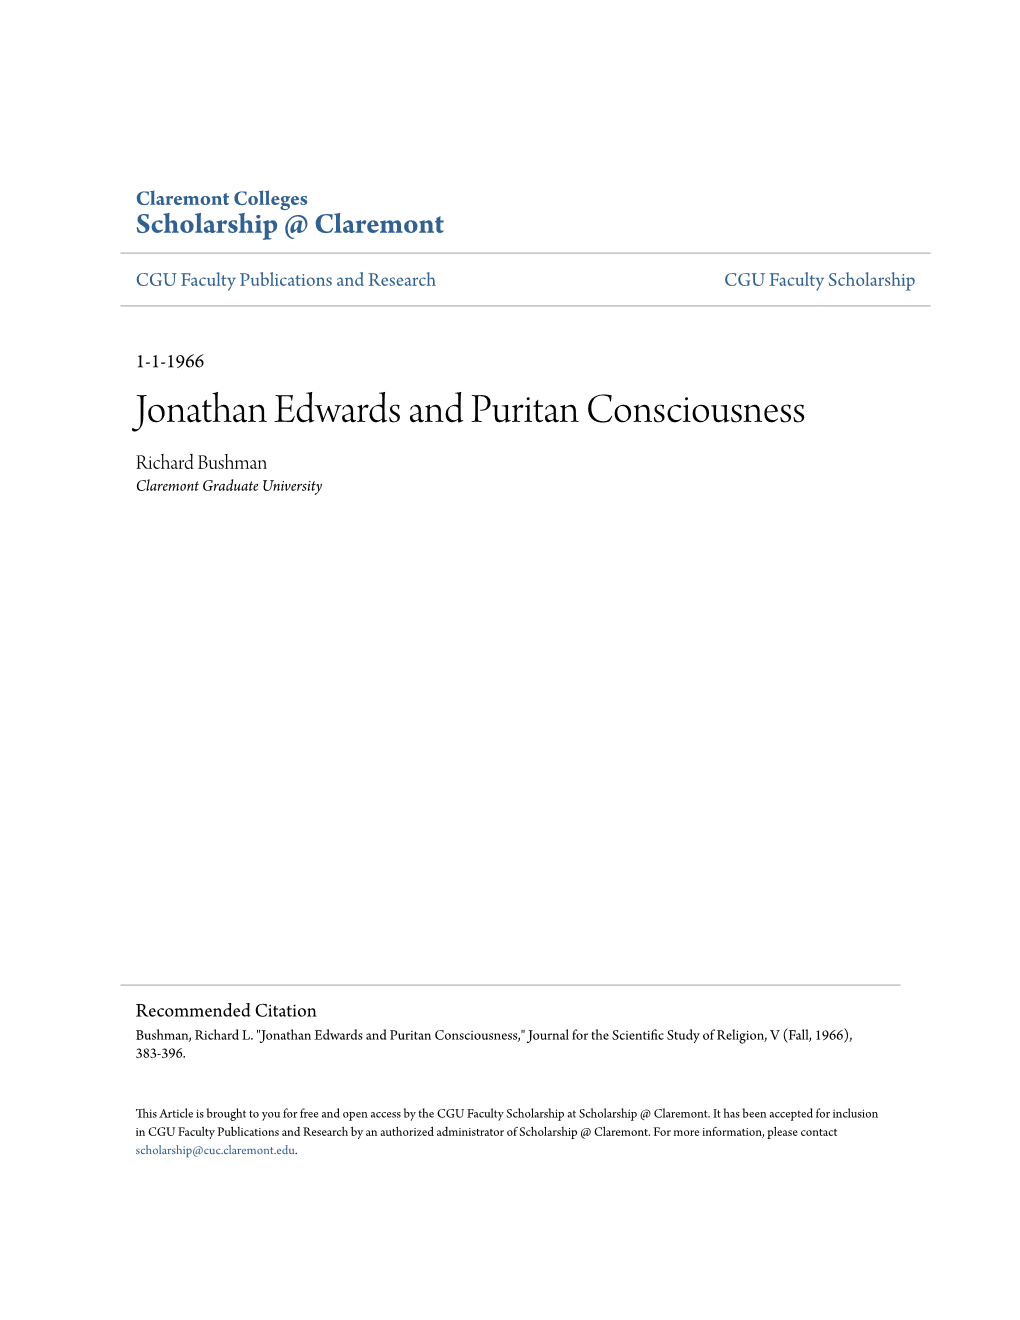 Jonathan Edwards and Puritan Consciousness Richard Bushman Claremont Graduate University